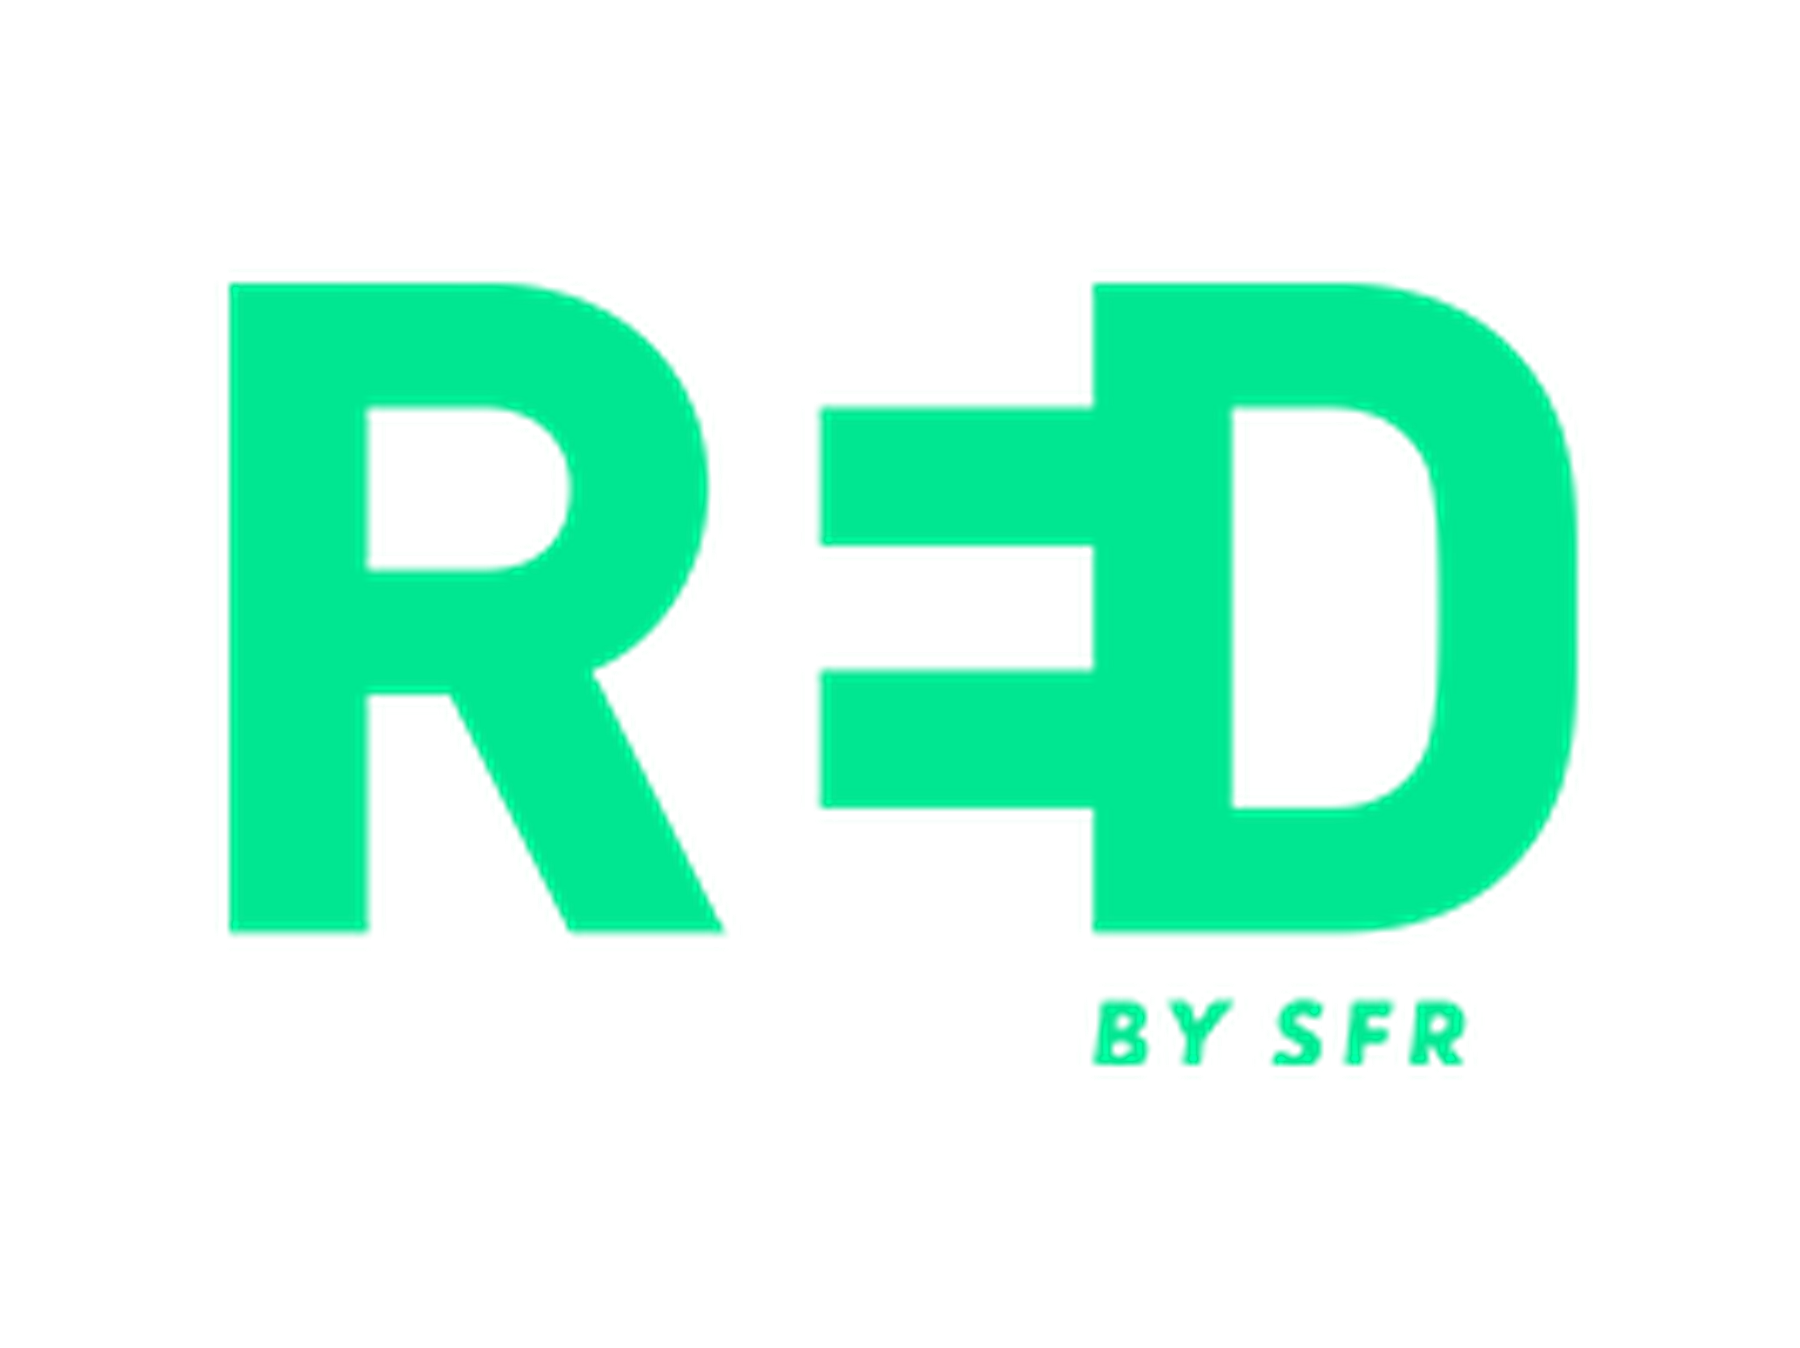 codes promo Red SFR